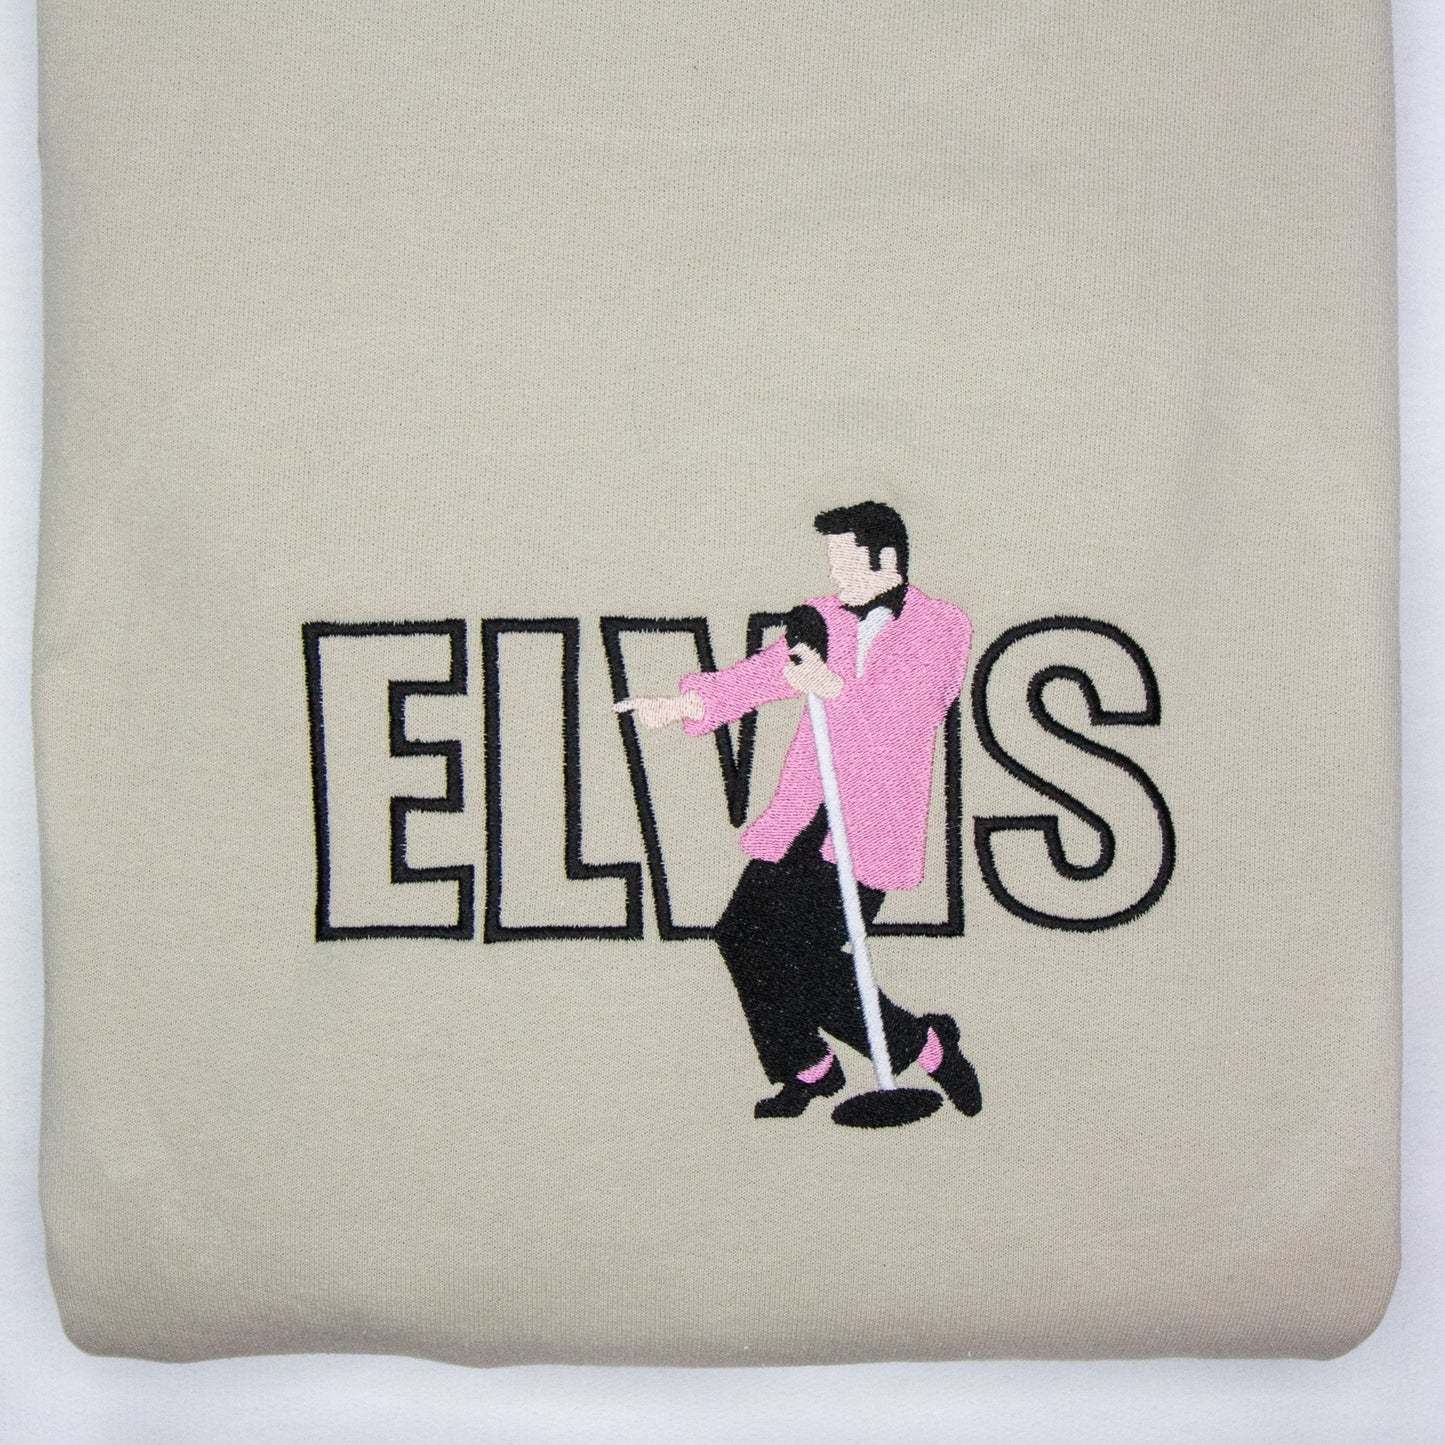 Elvis Presley in Pink Suit Embroidered Crewneck